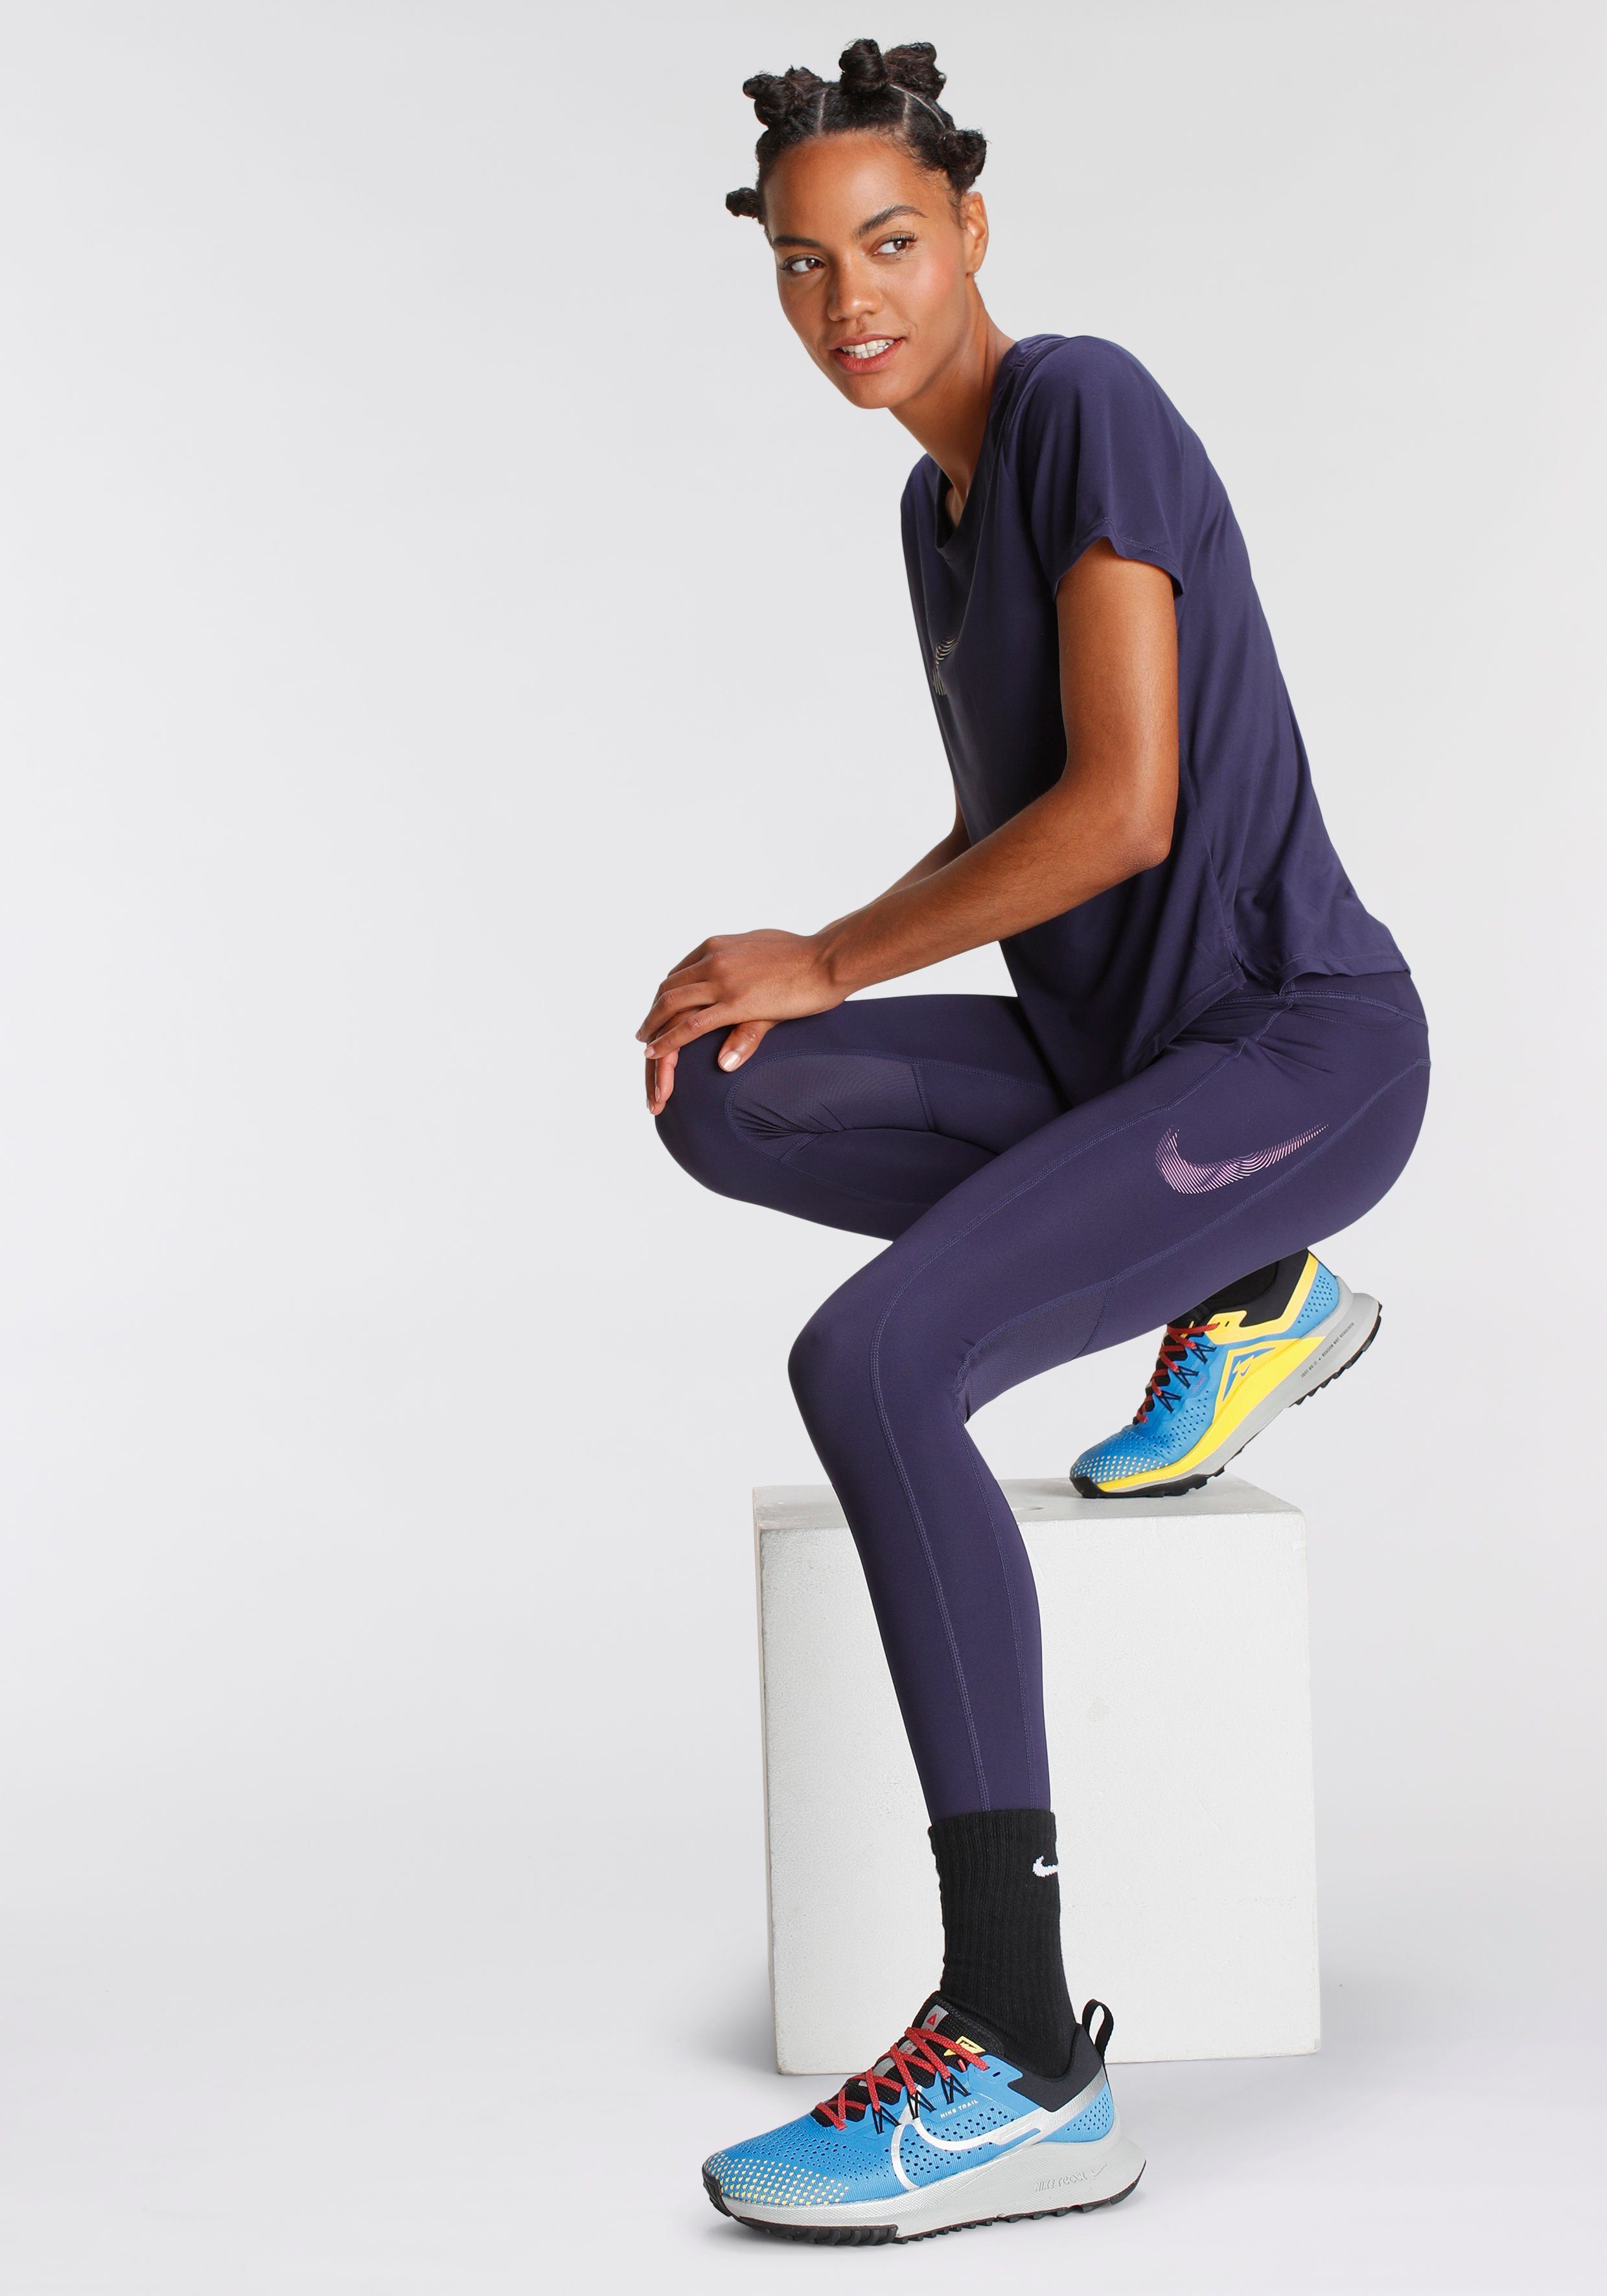 BRA BLACK/WHITE SWOOSH MEDIUM Nike SPORTS SUPPORT Sport-BH PADDED WOMEN'S